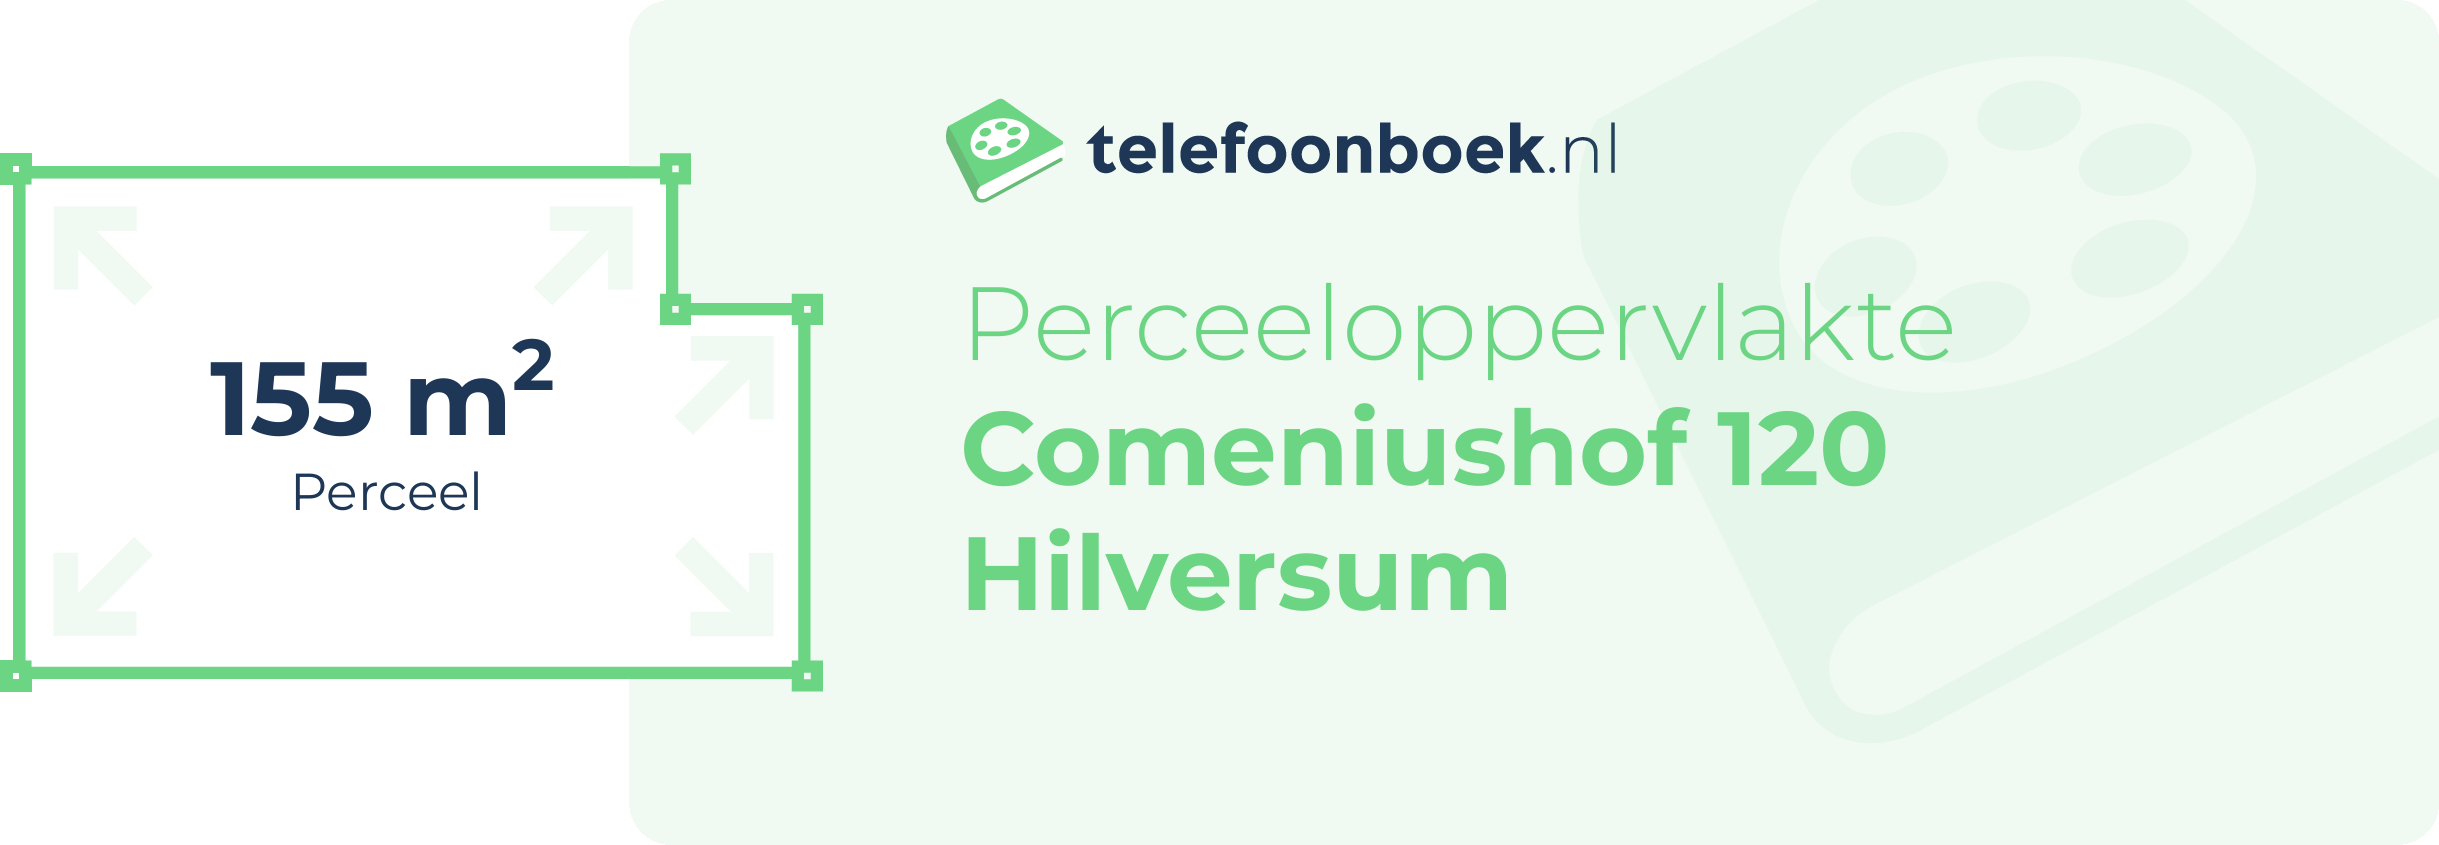 Perceeloppervlakte Comeniushof 120 Hilversum